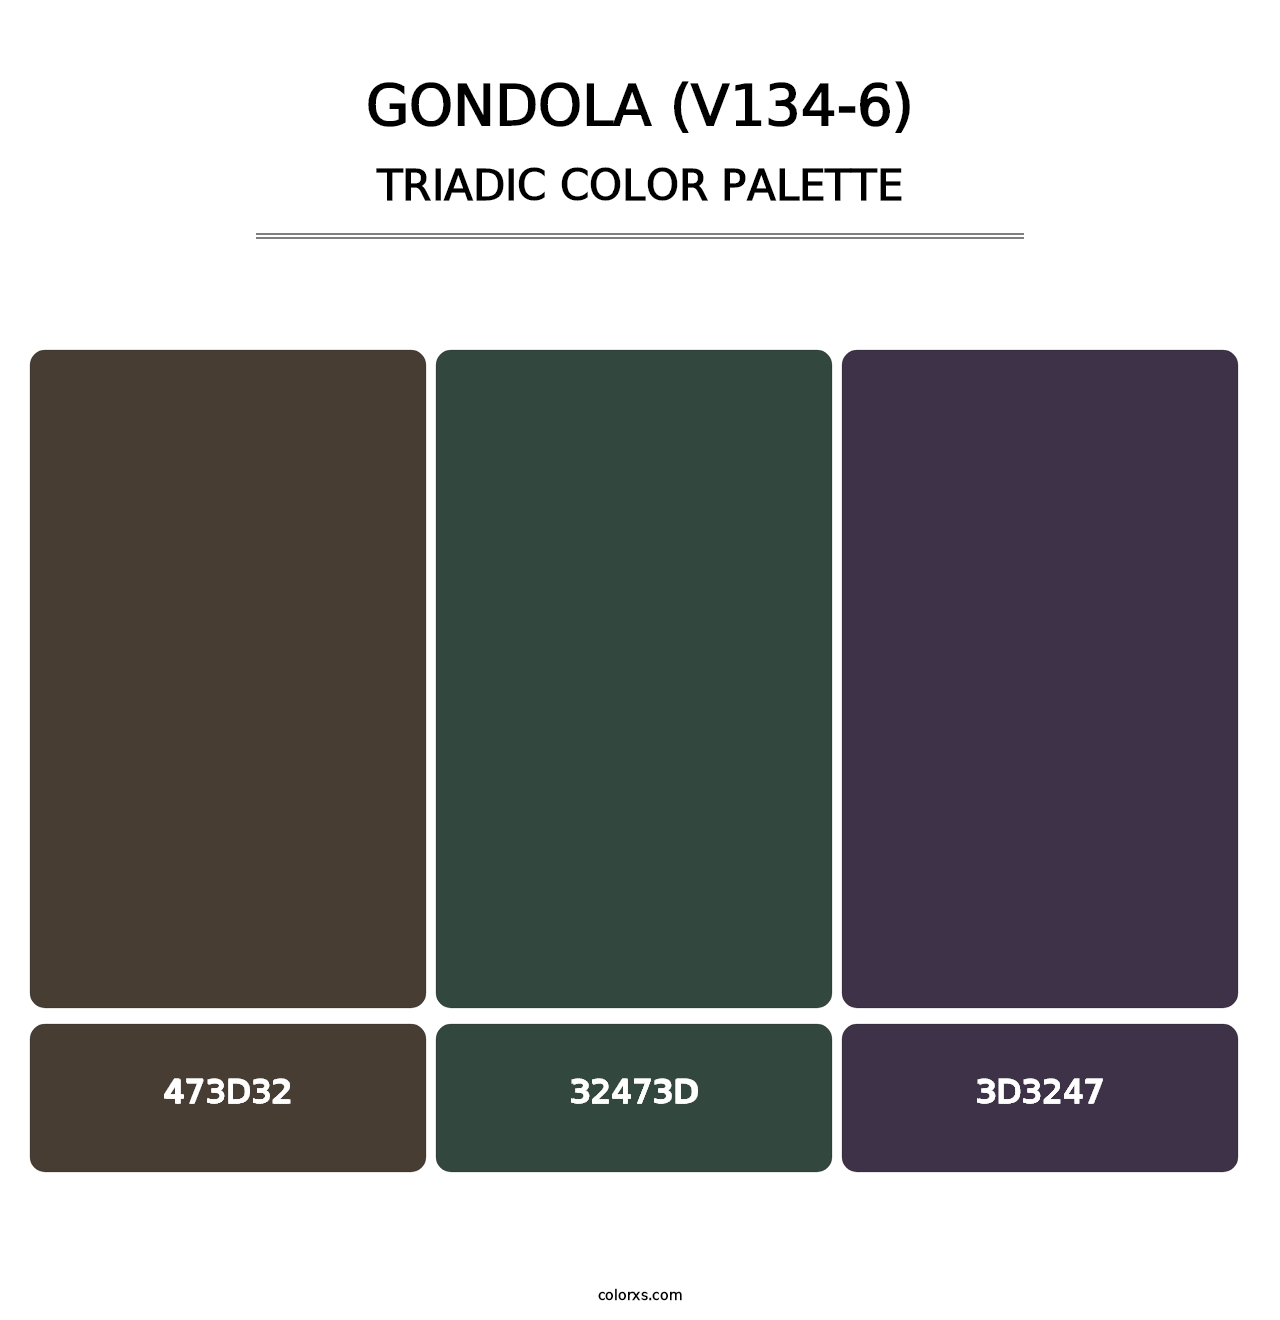 Gondola (V134-6) - Triadic Color Palette